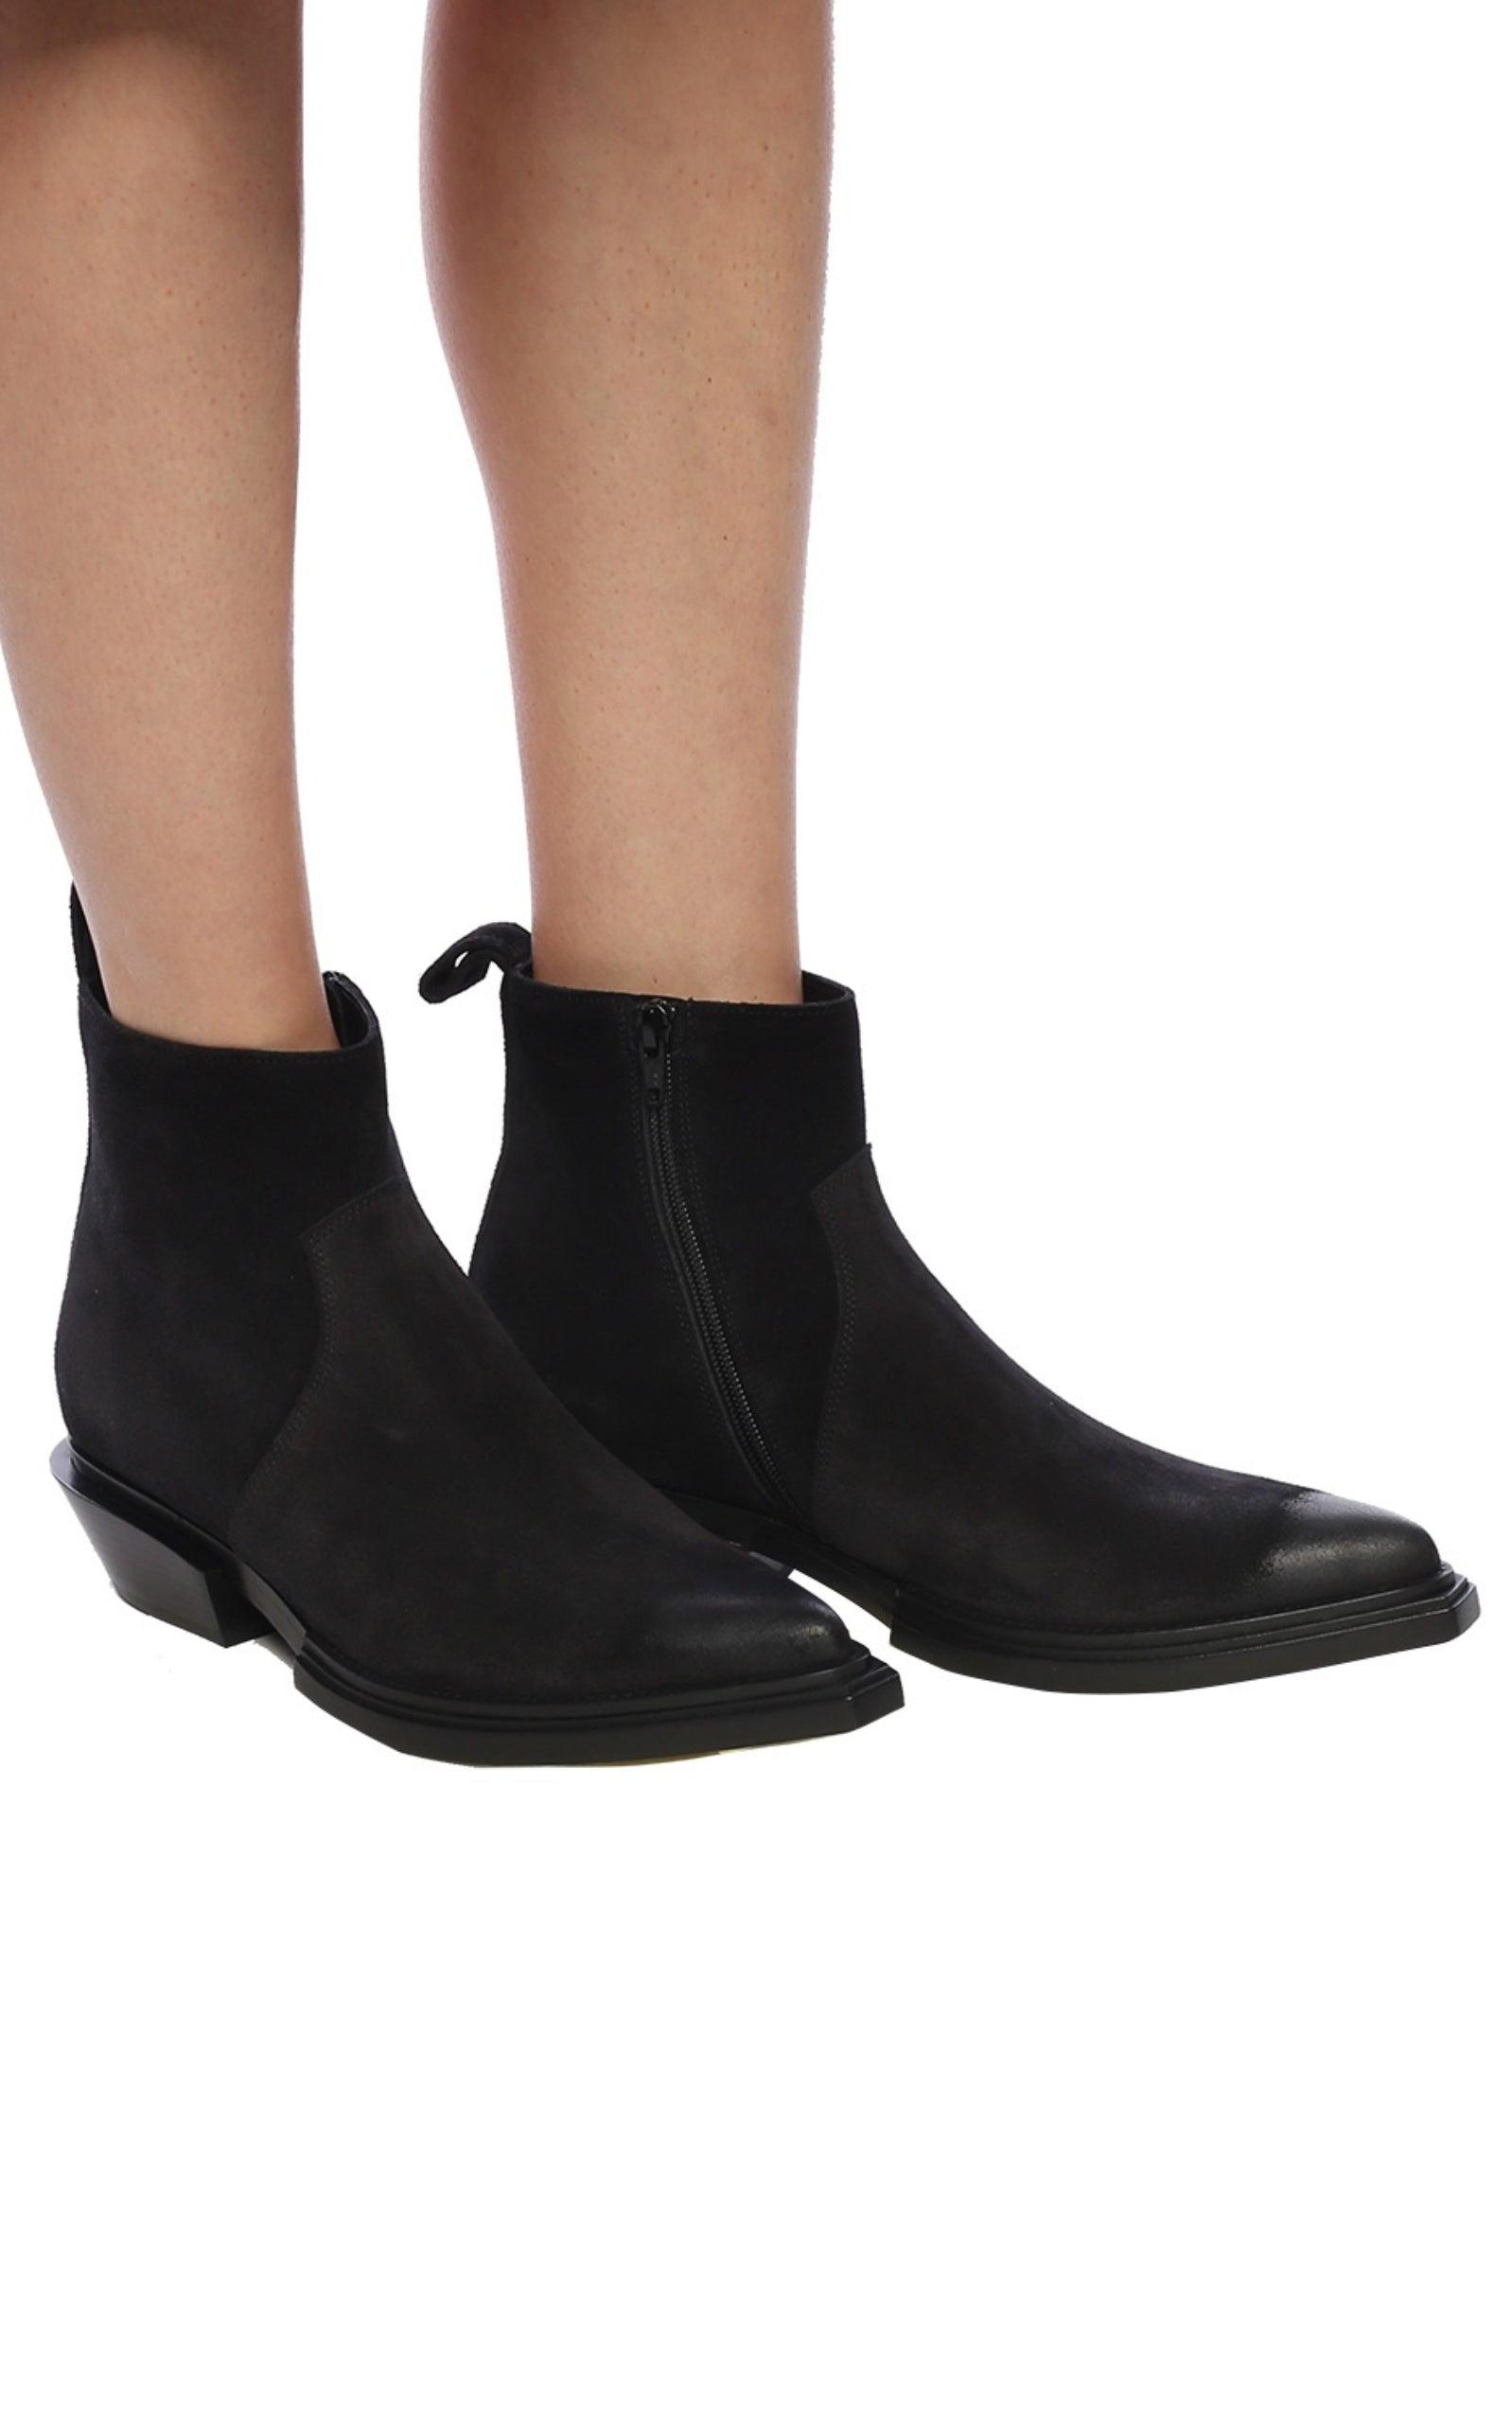  BalenciagaBlack Suede Ankle Boots - Runway Catalog